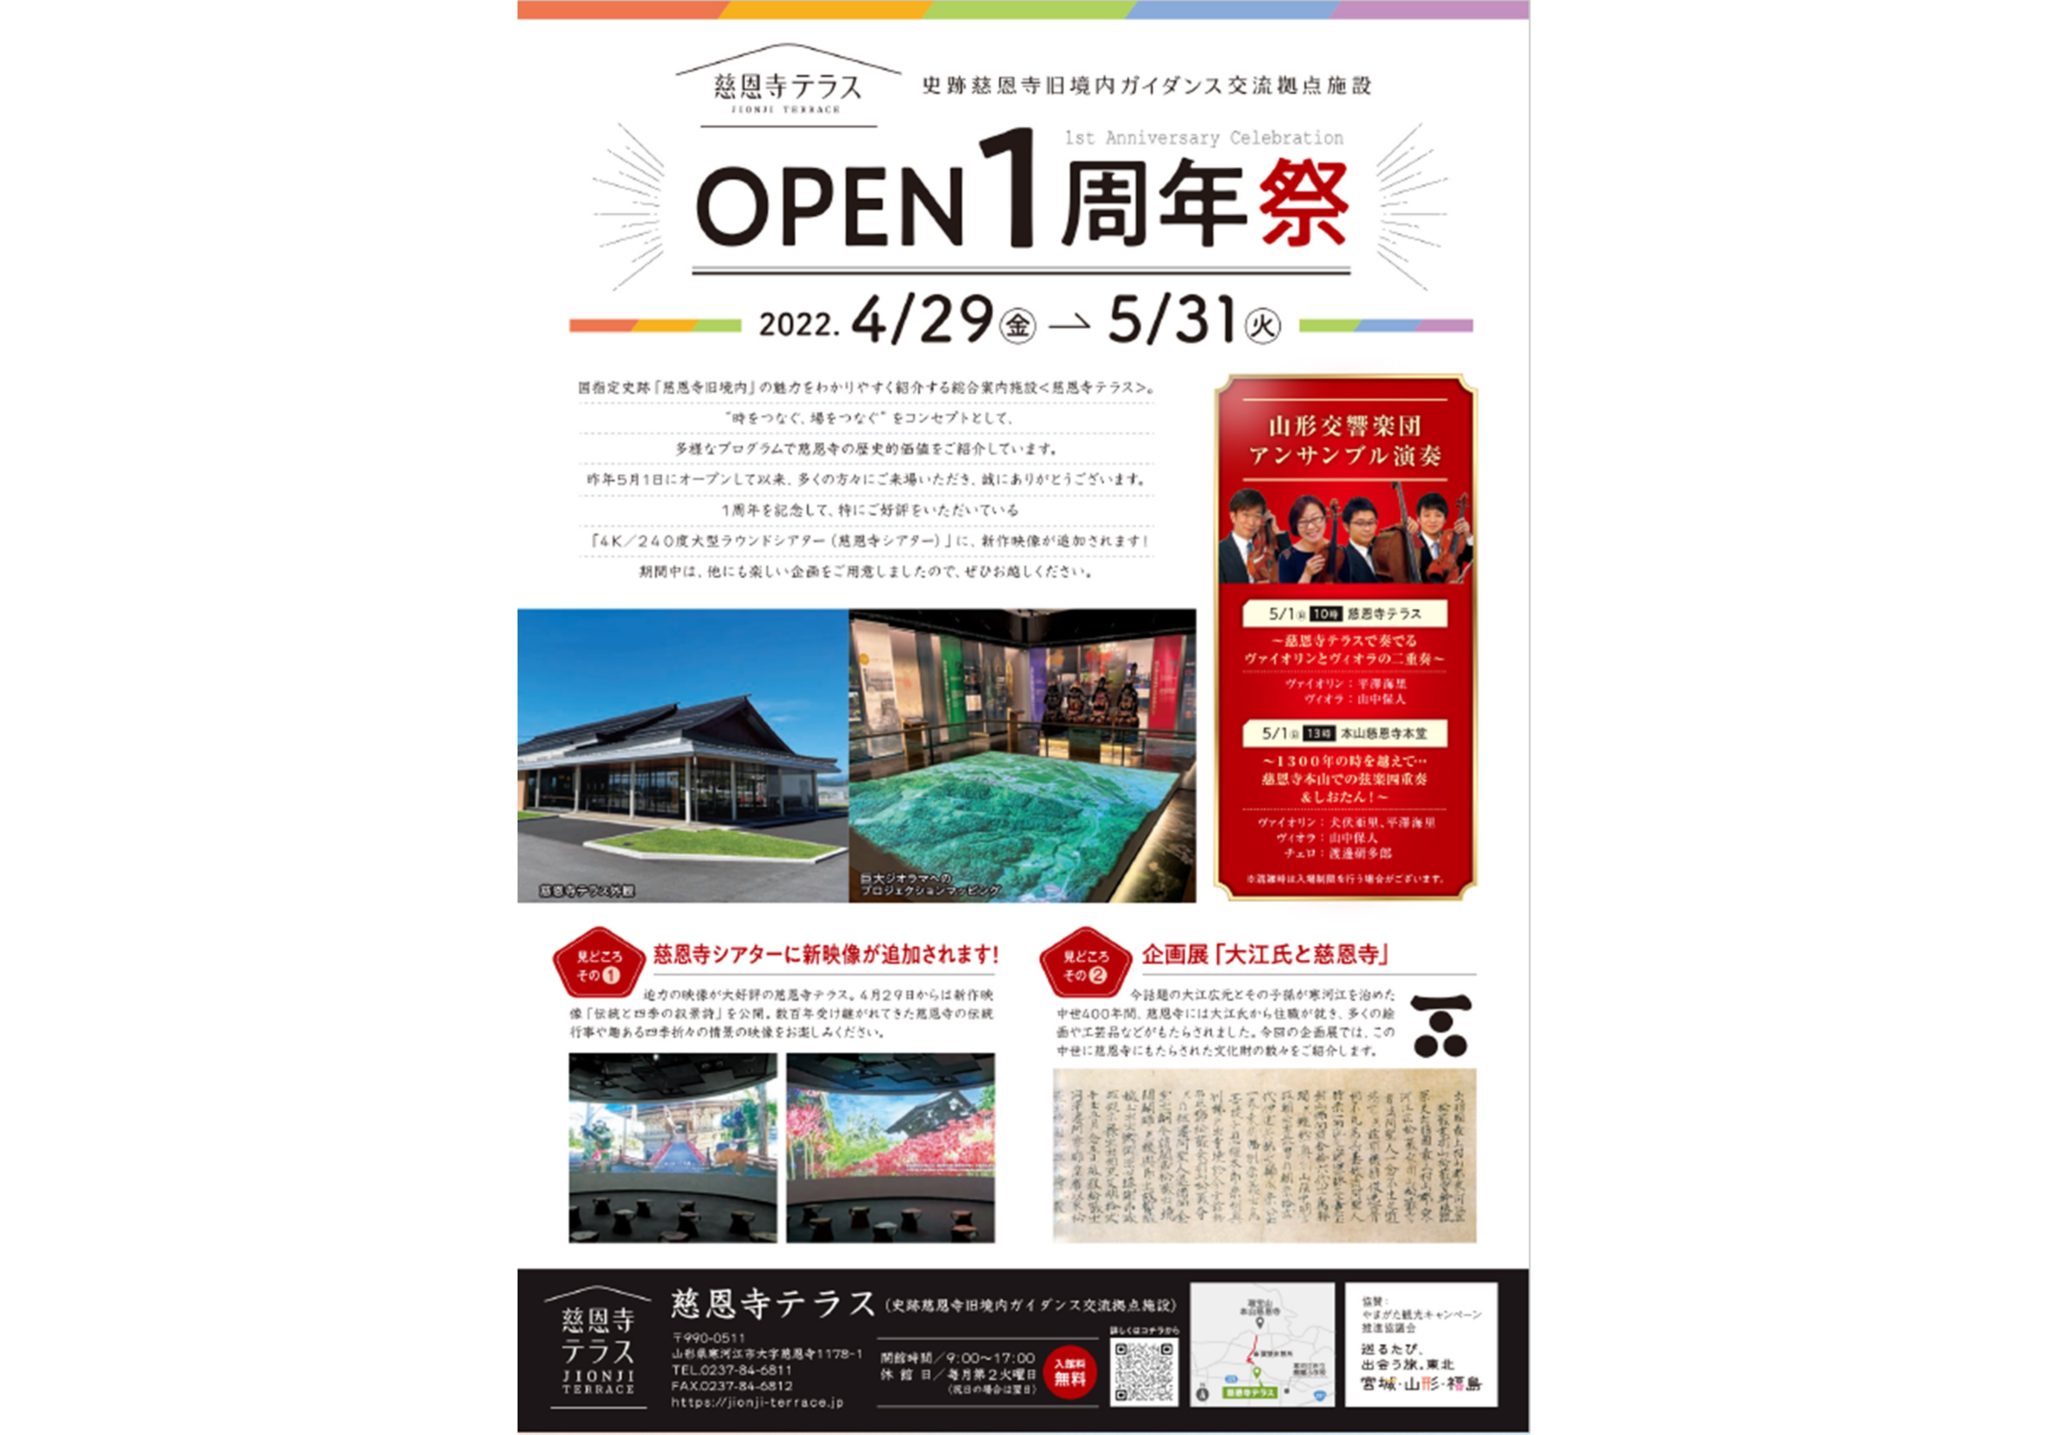 Jion-ji Terrace Opening 1st Anniversary Festival